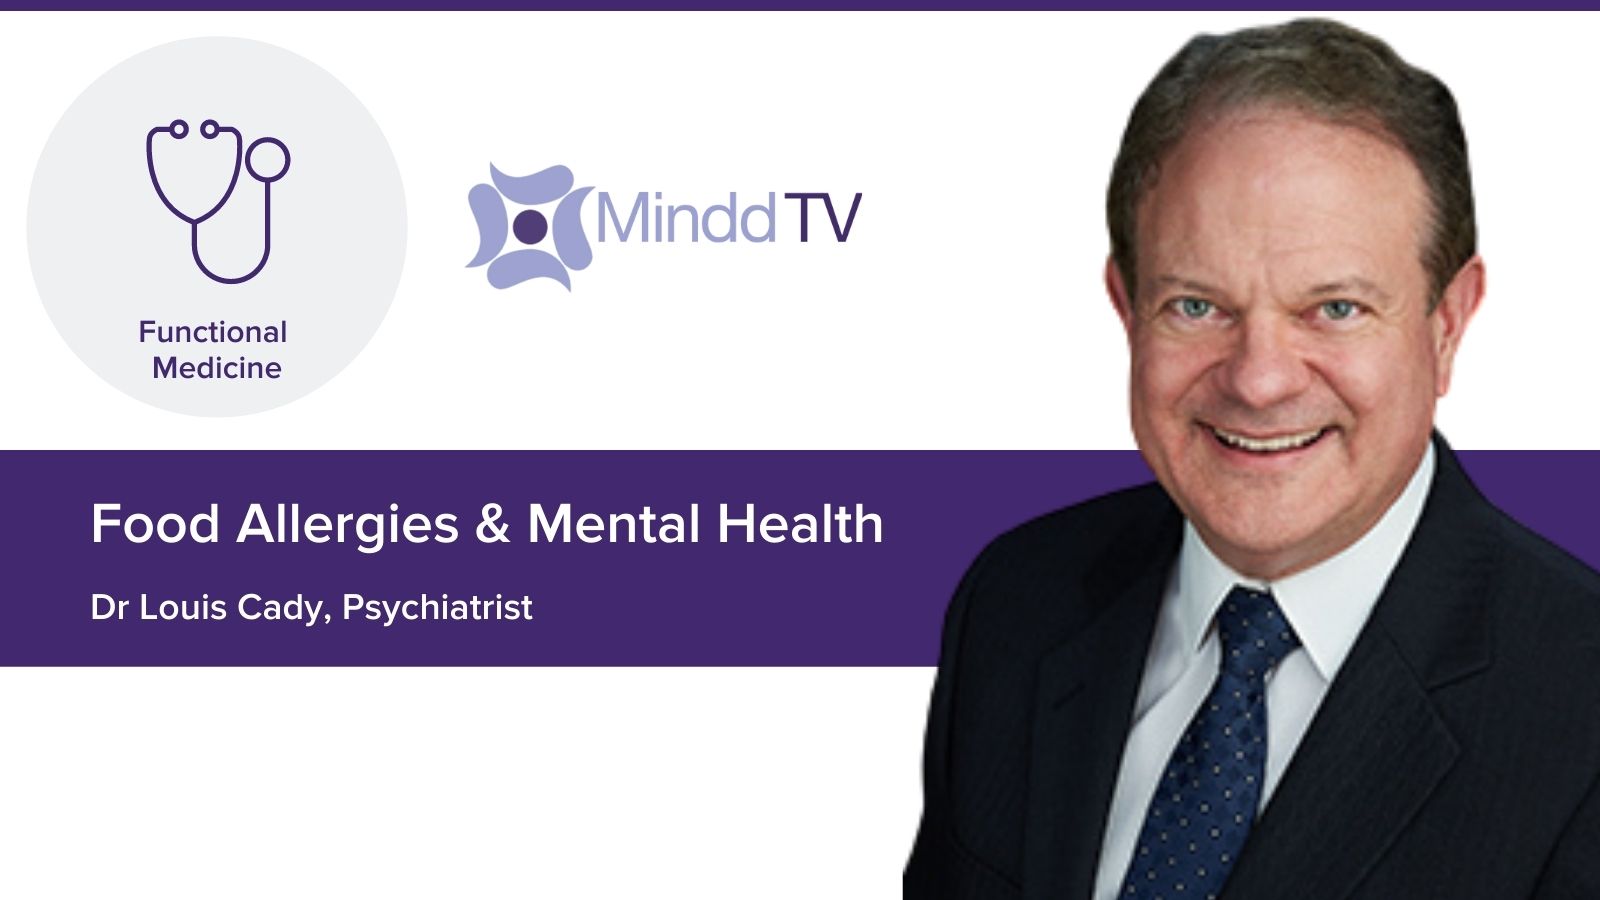 Food Allergies & Mental Health, Dr Louis Cady, Psychiatrist